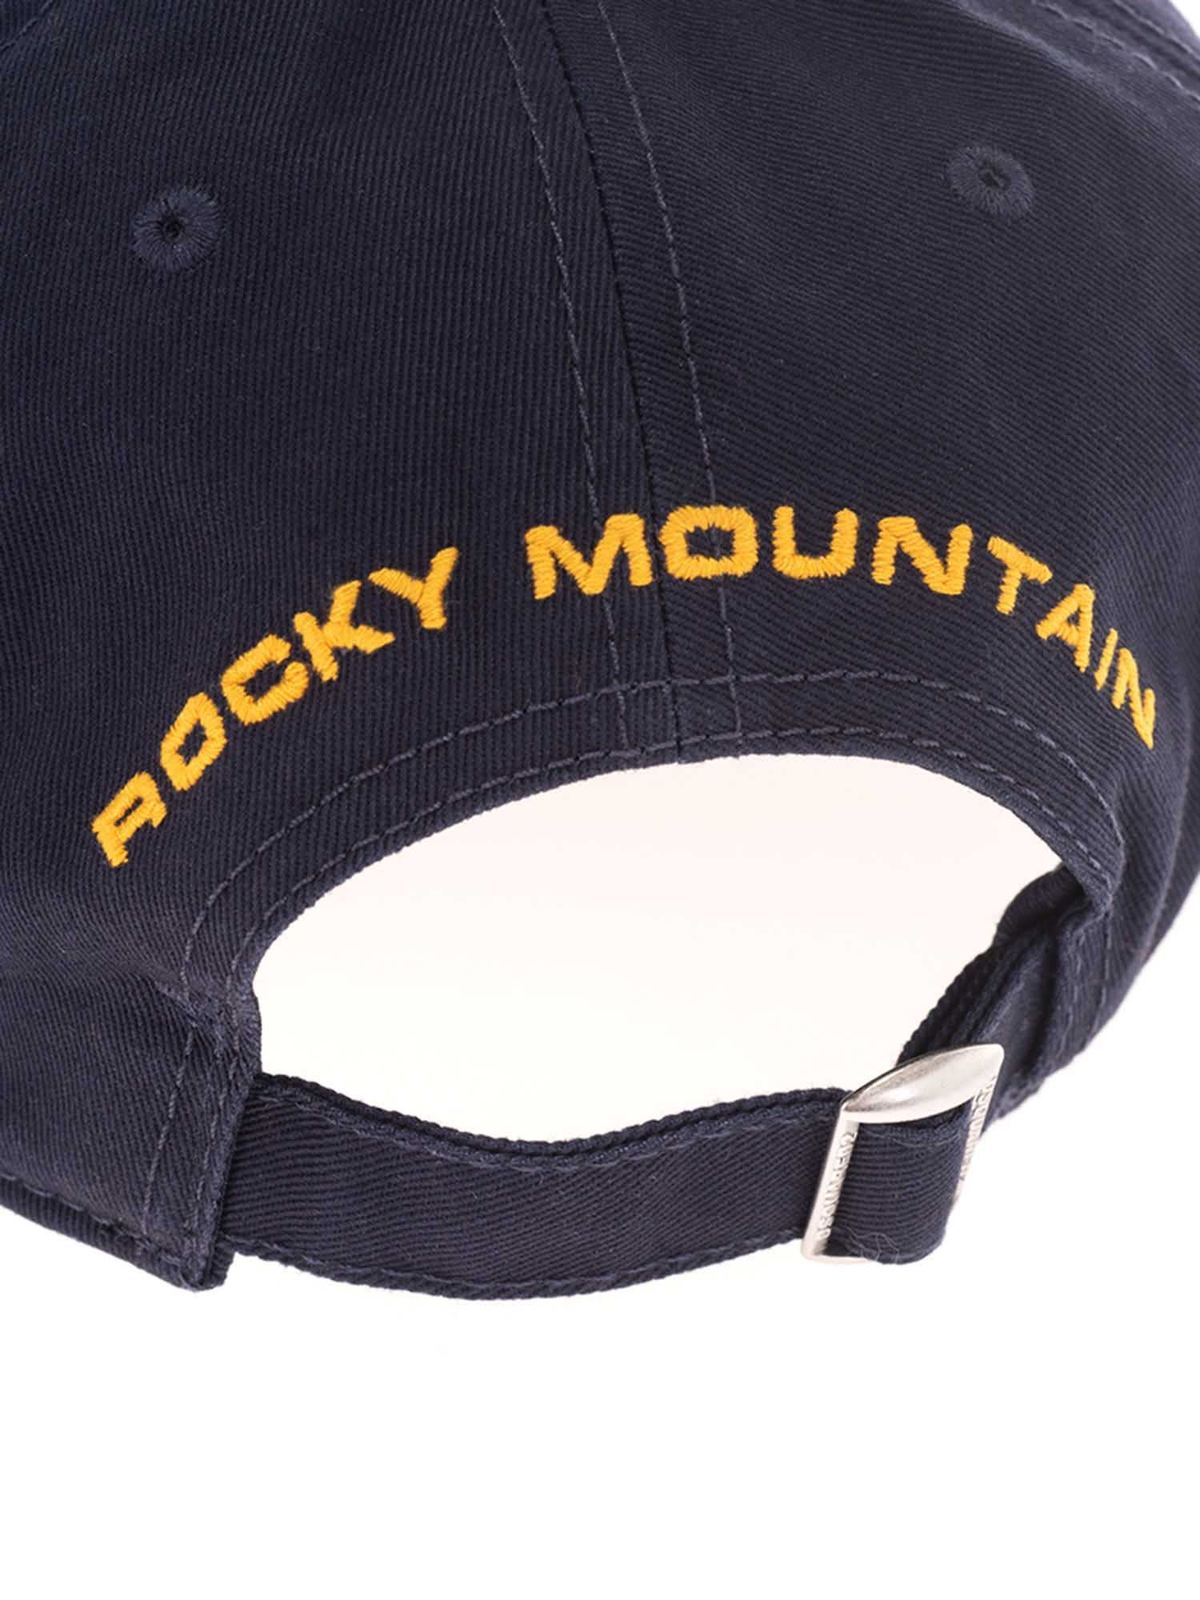 dsquared2 rocky mountain cap